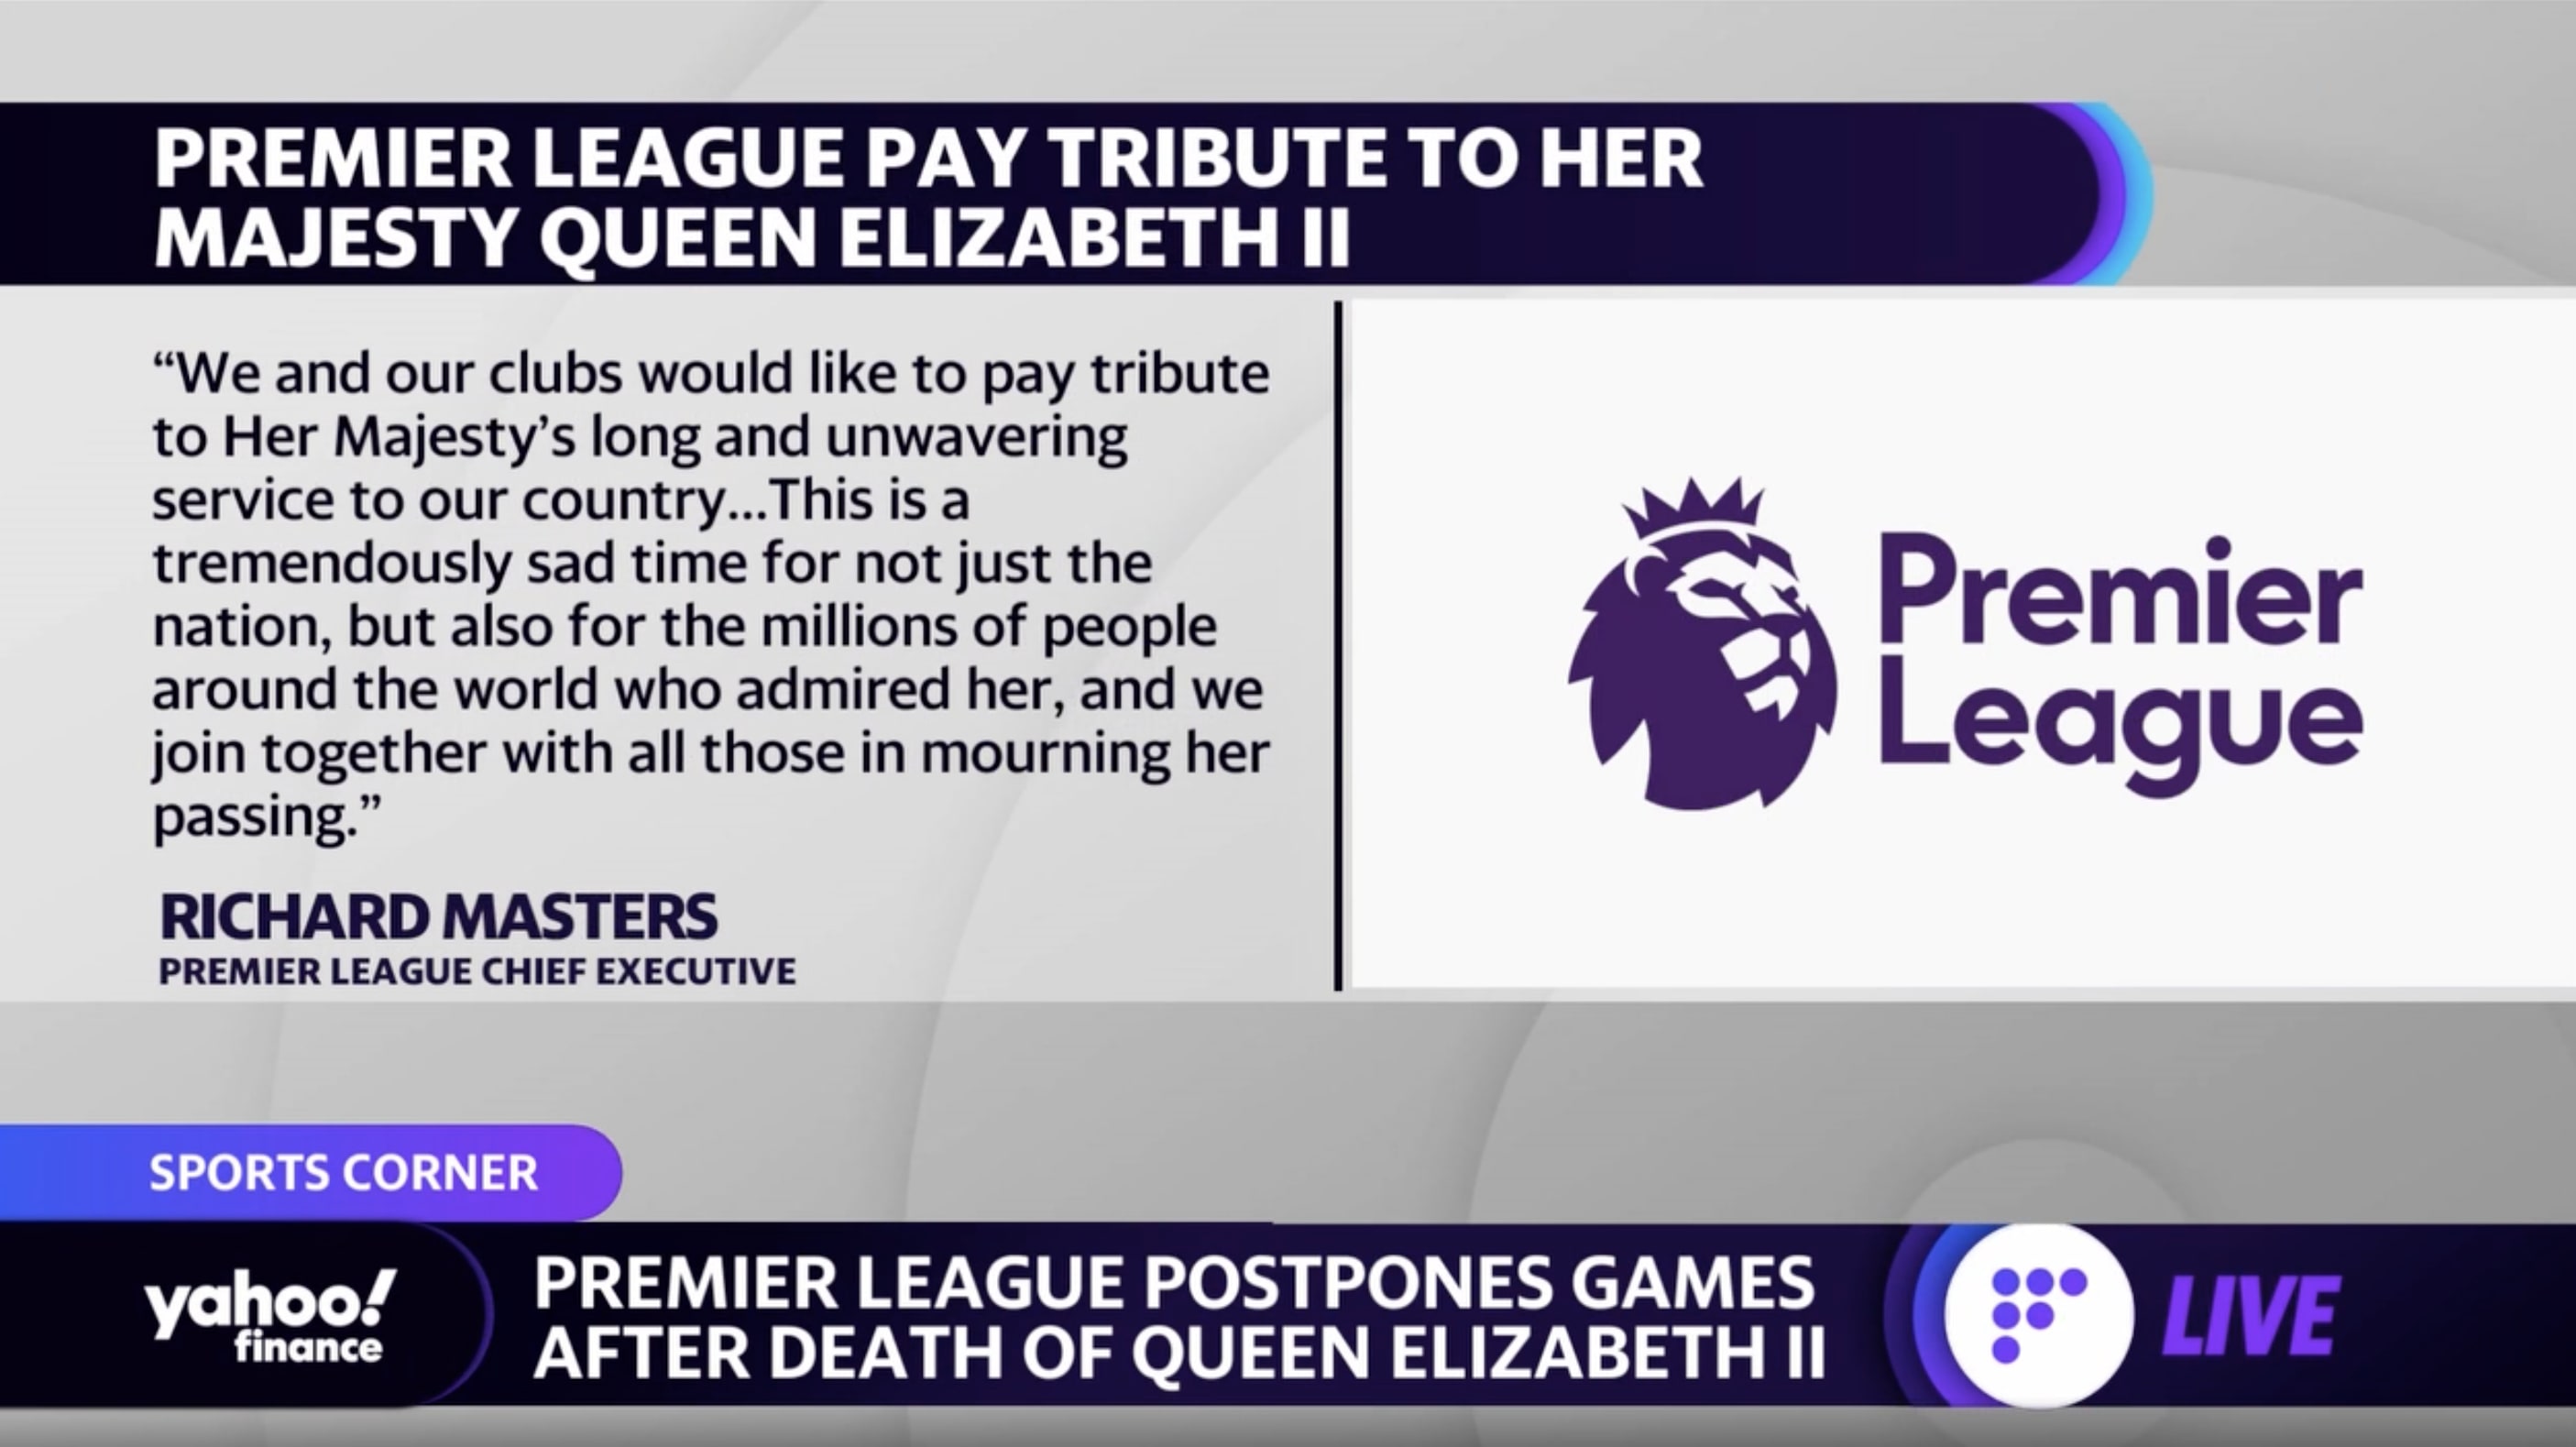 Premier League postpones games in a tribute to Queen Elizabeth II